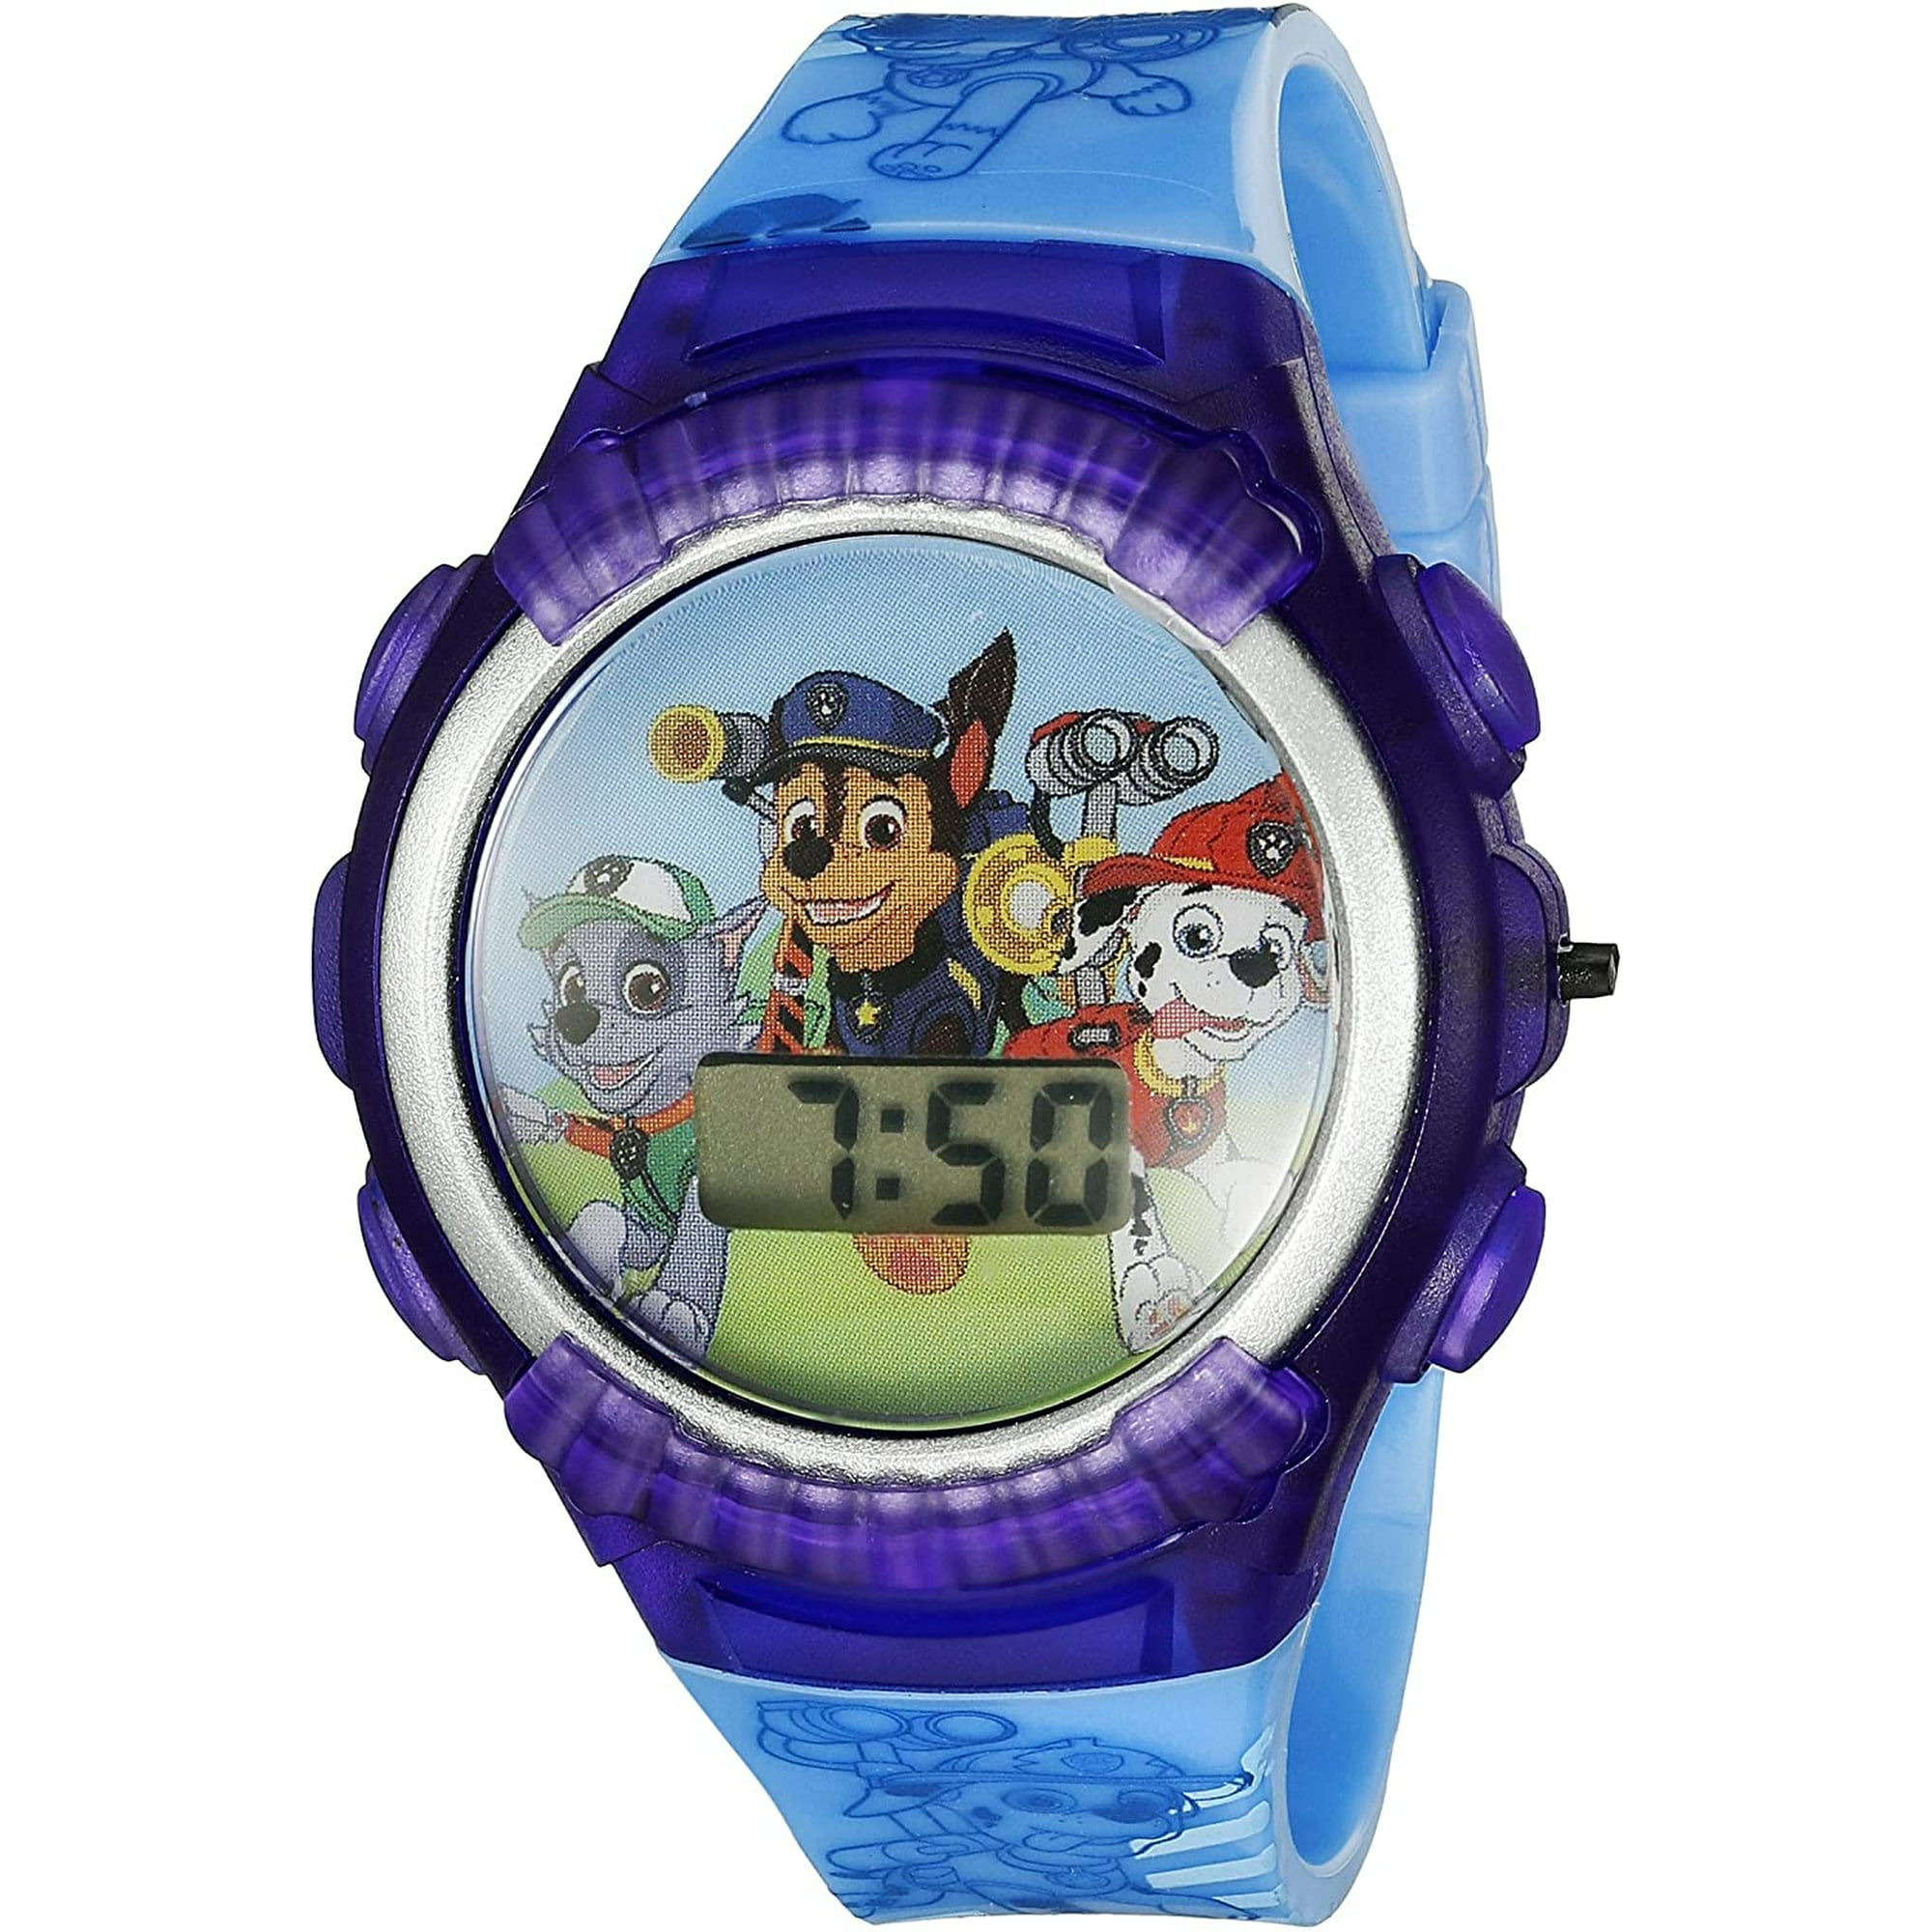 Reloj digital para niños PawB015WE0VN4